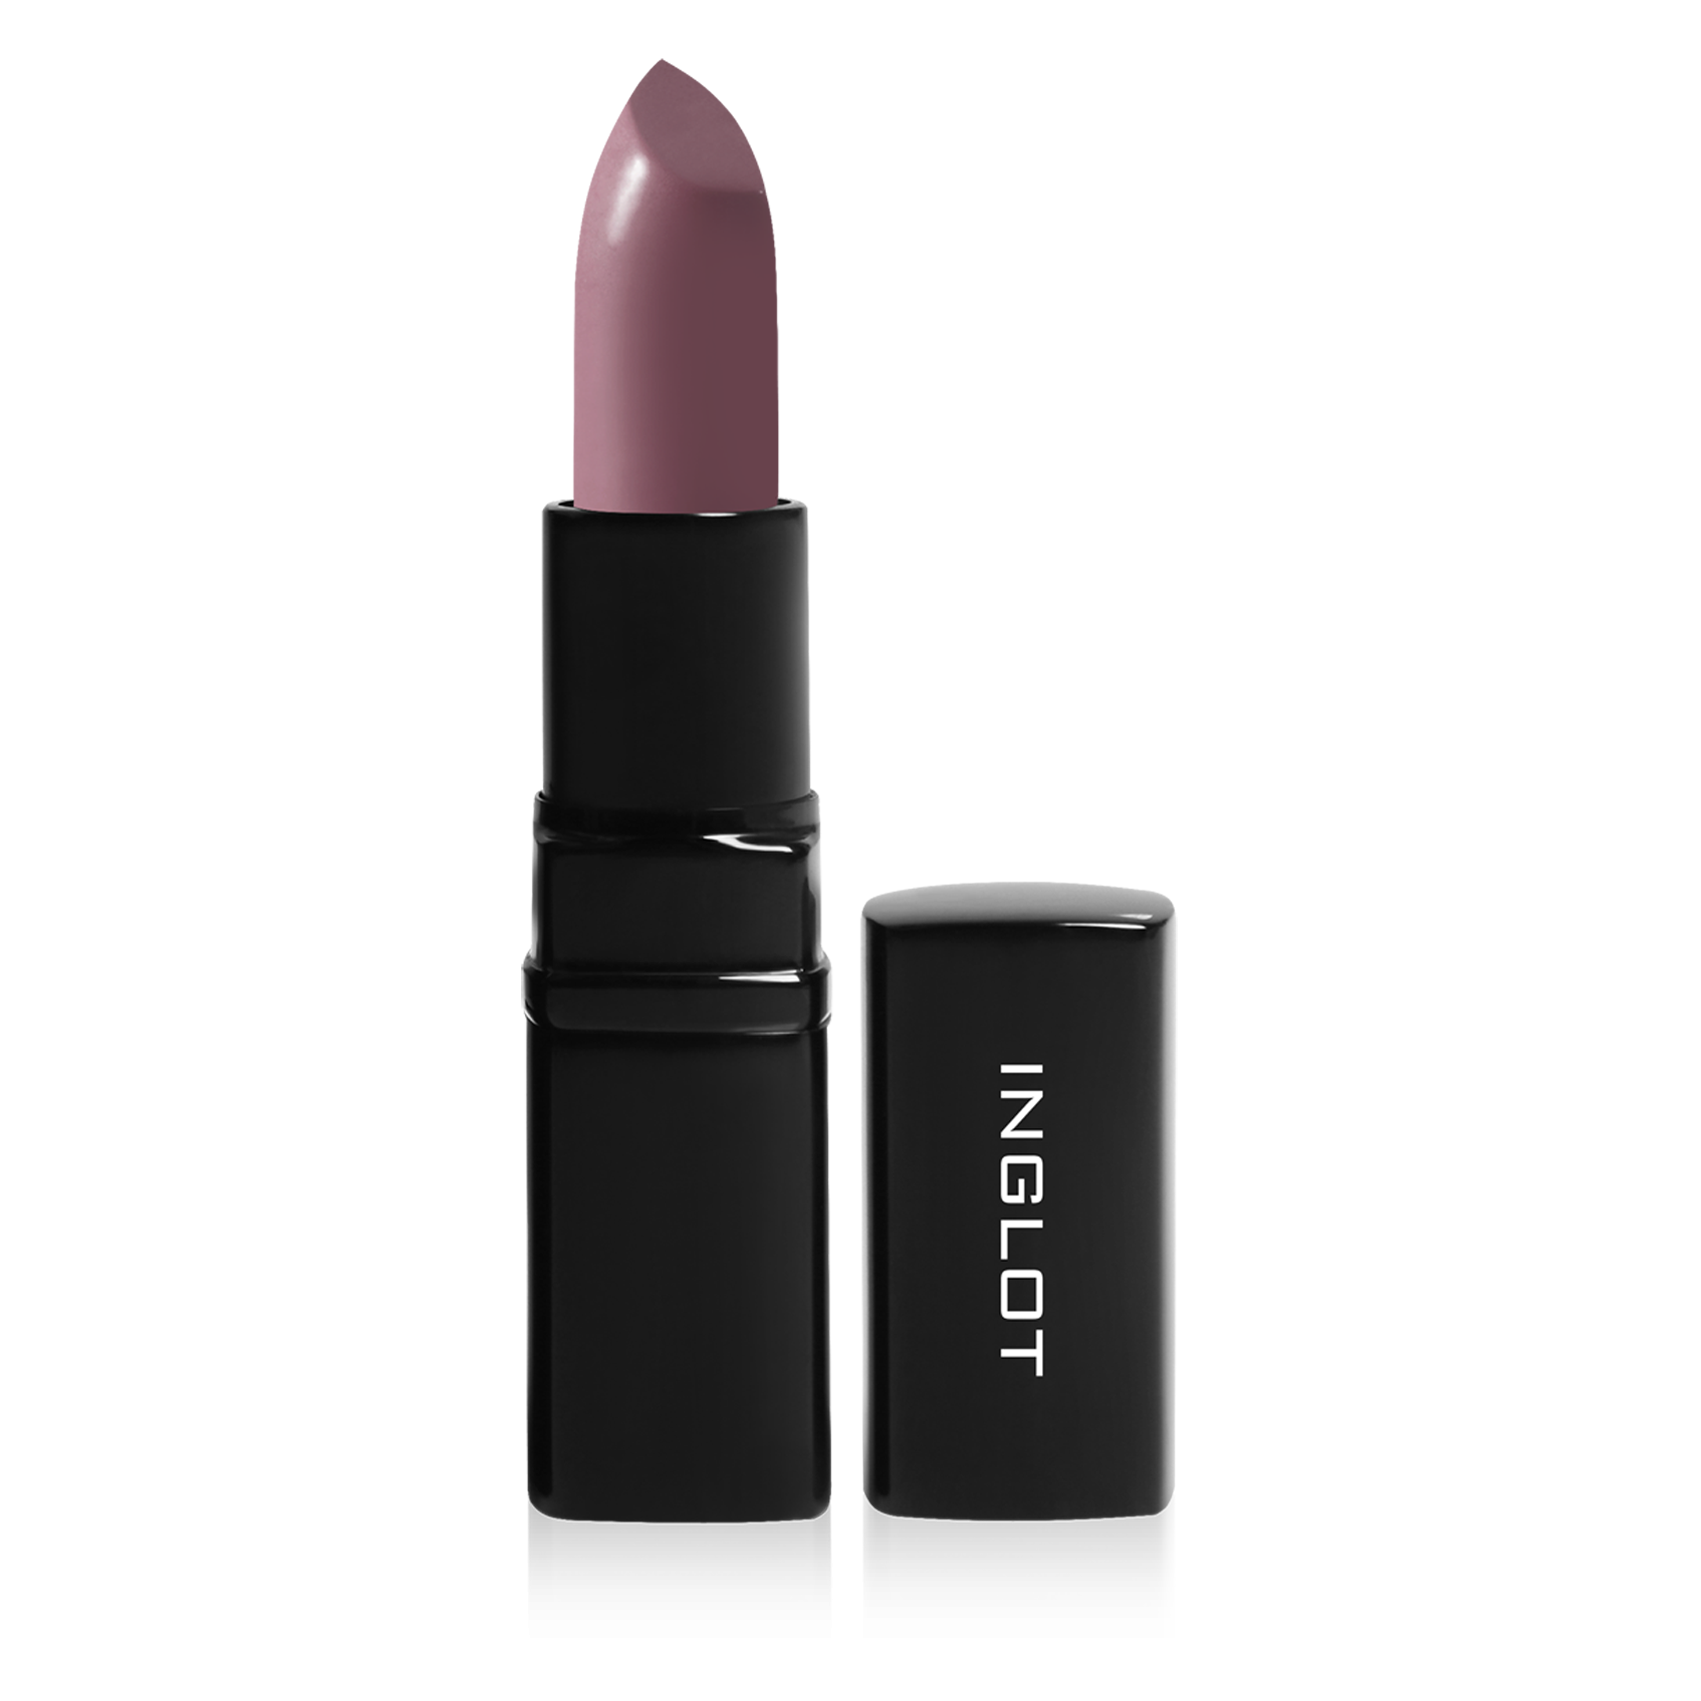 Makeup Lipsticks PNG Free File Download